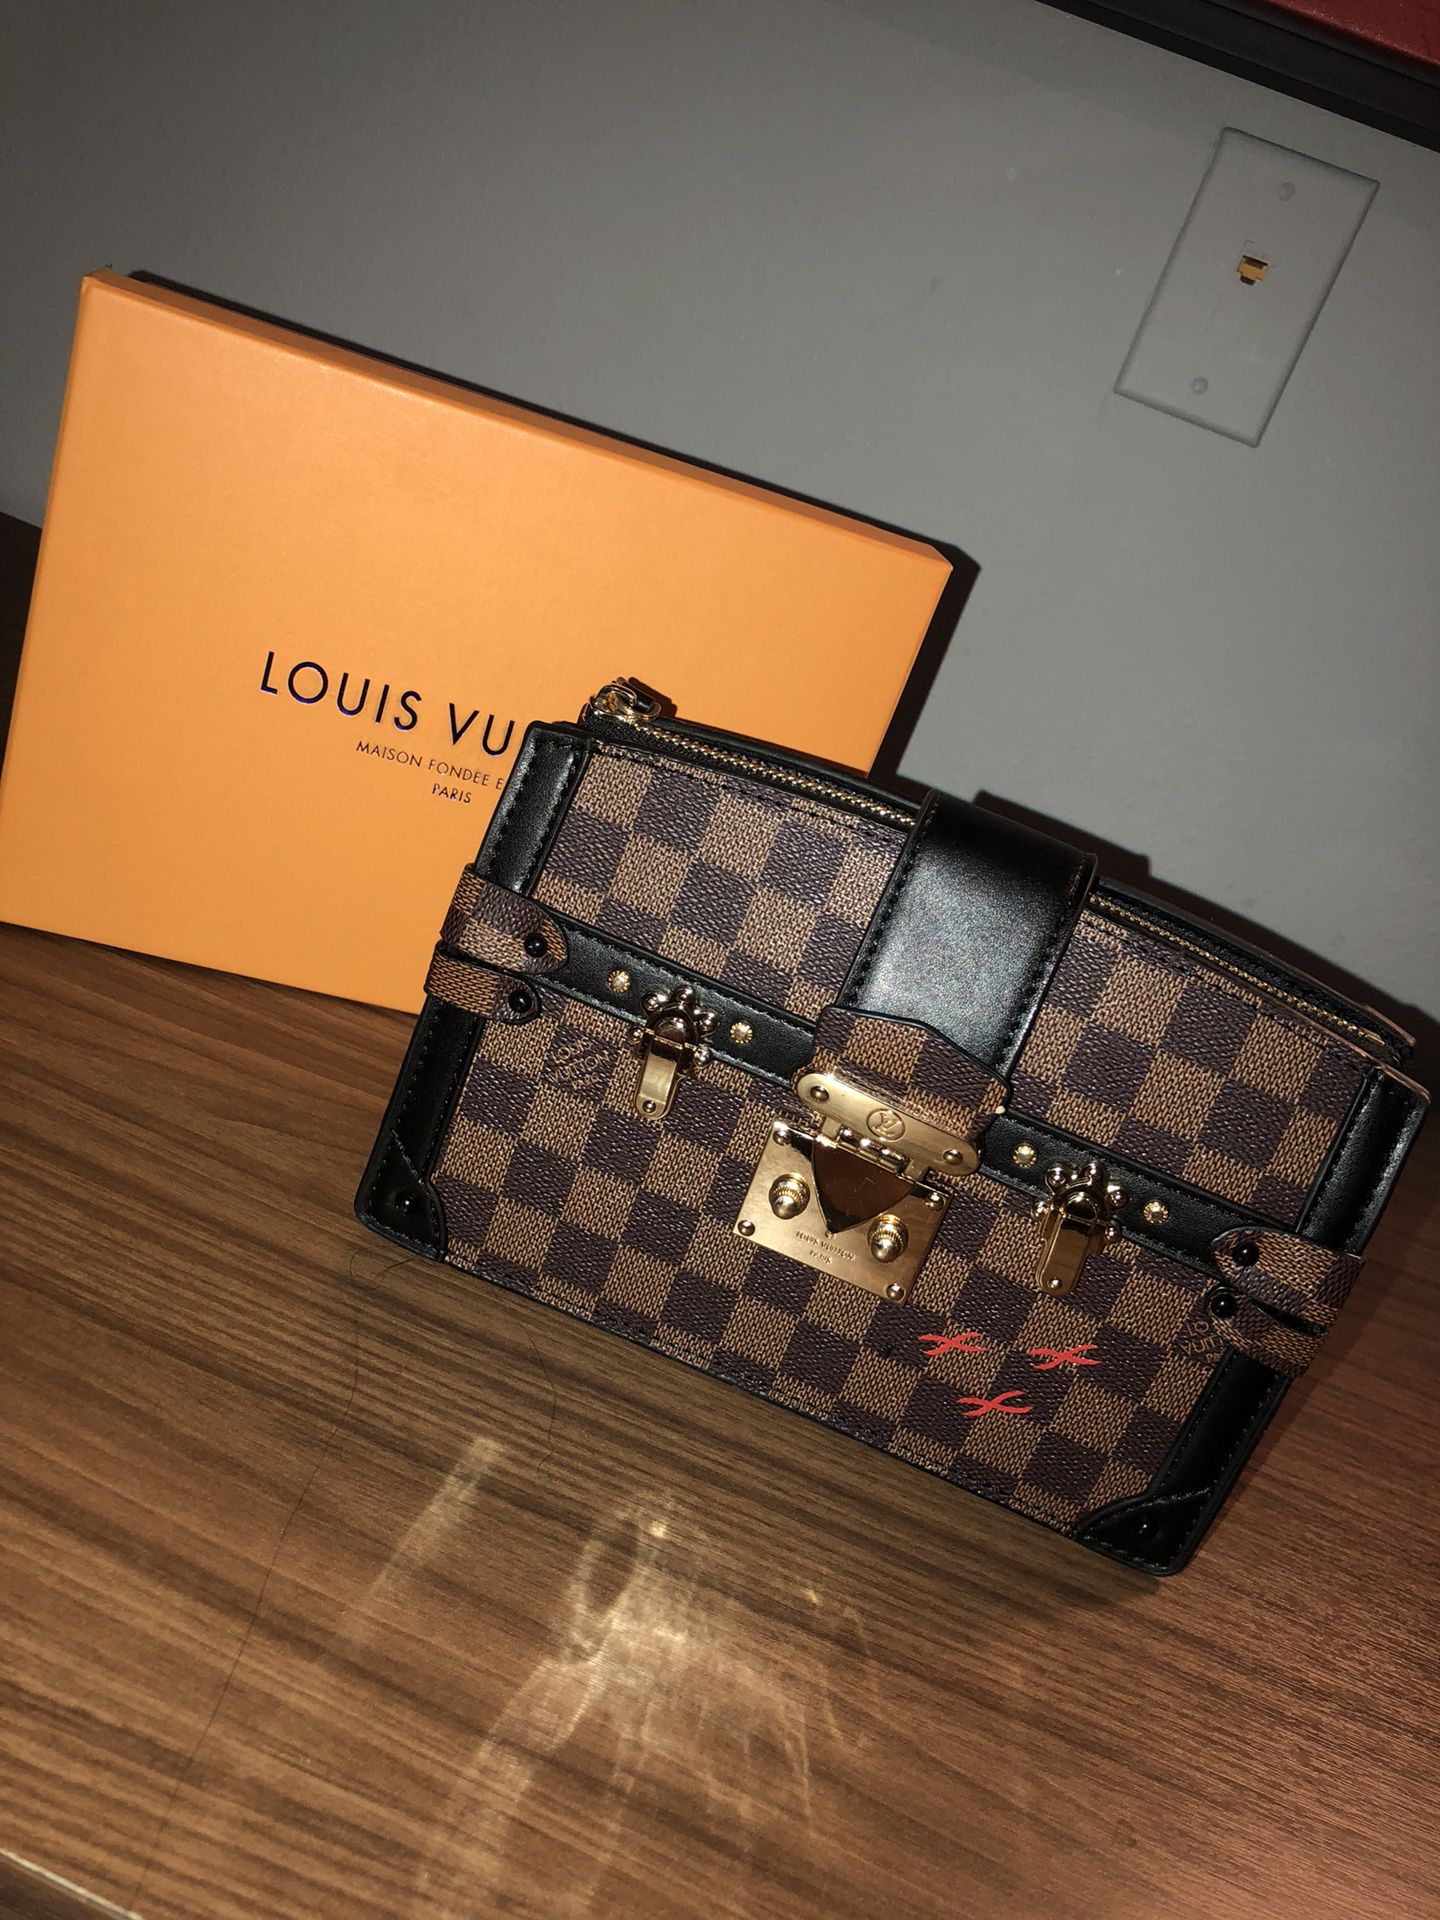 Open box never used Louis Vuitton cross body bag